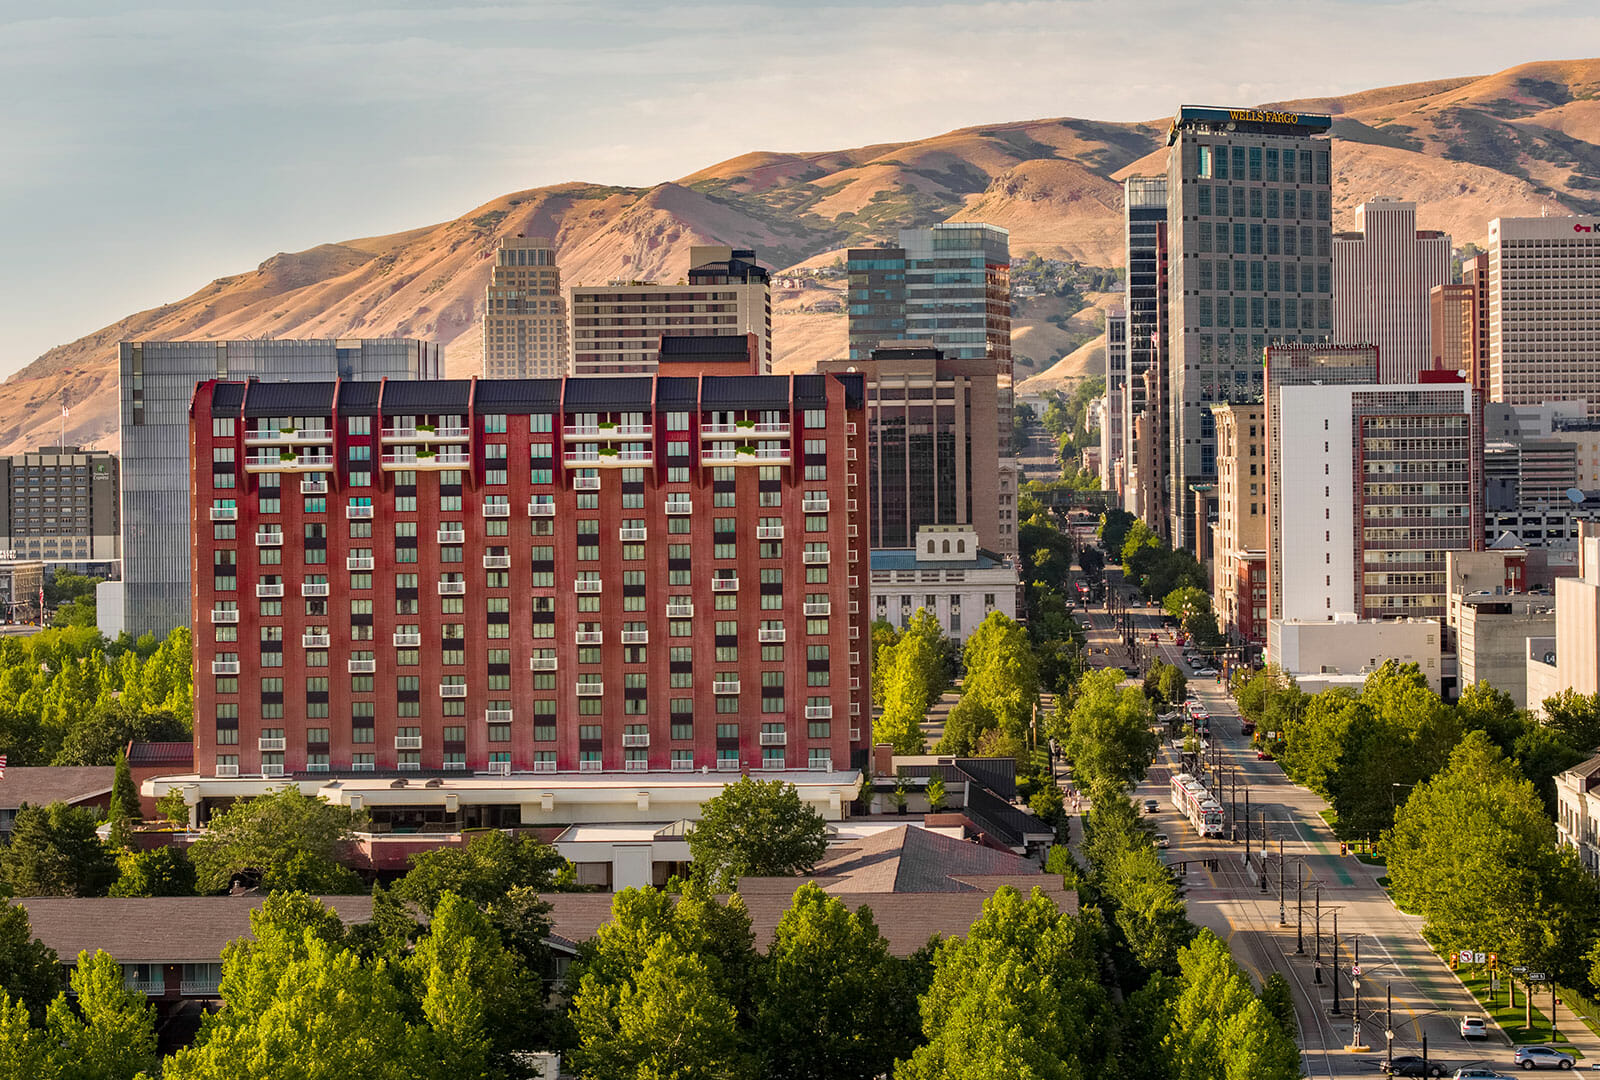 Traveling to Salt Lake - The Little America Hotel, Salt Lake City